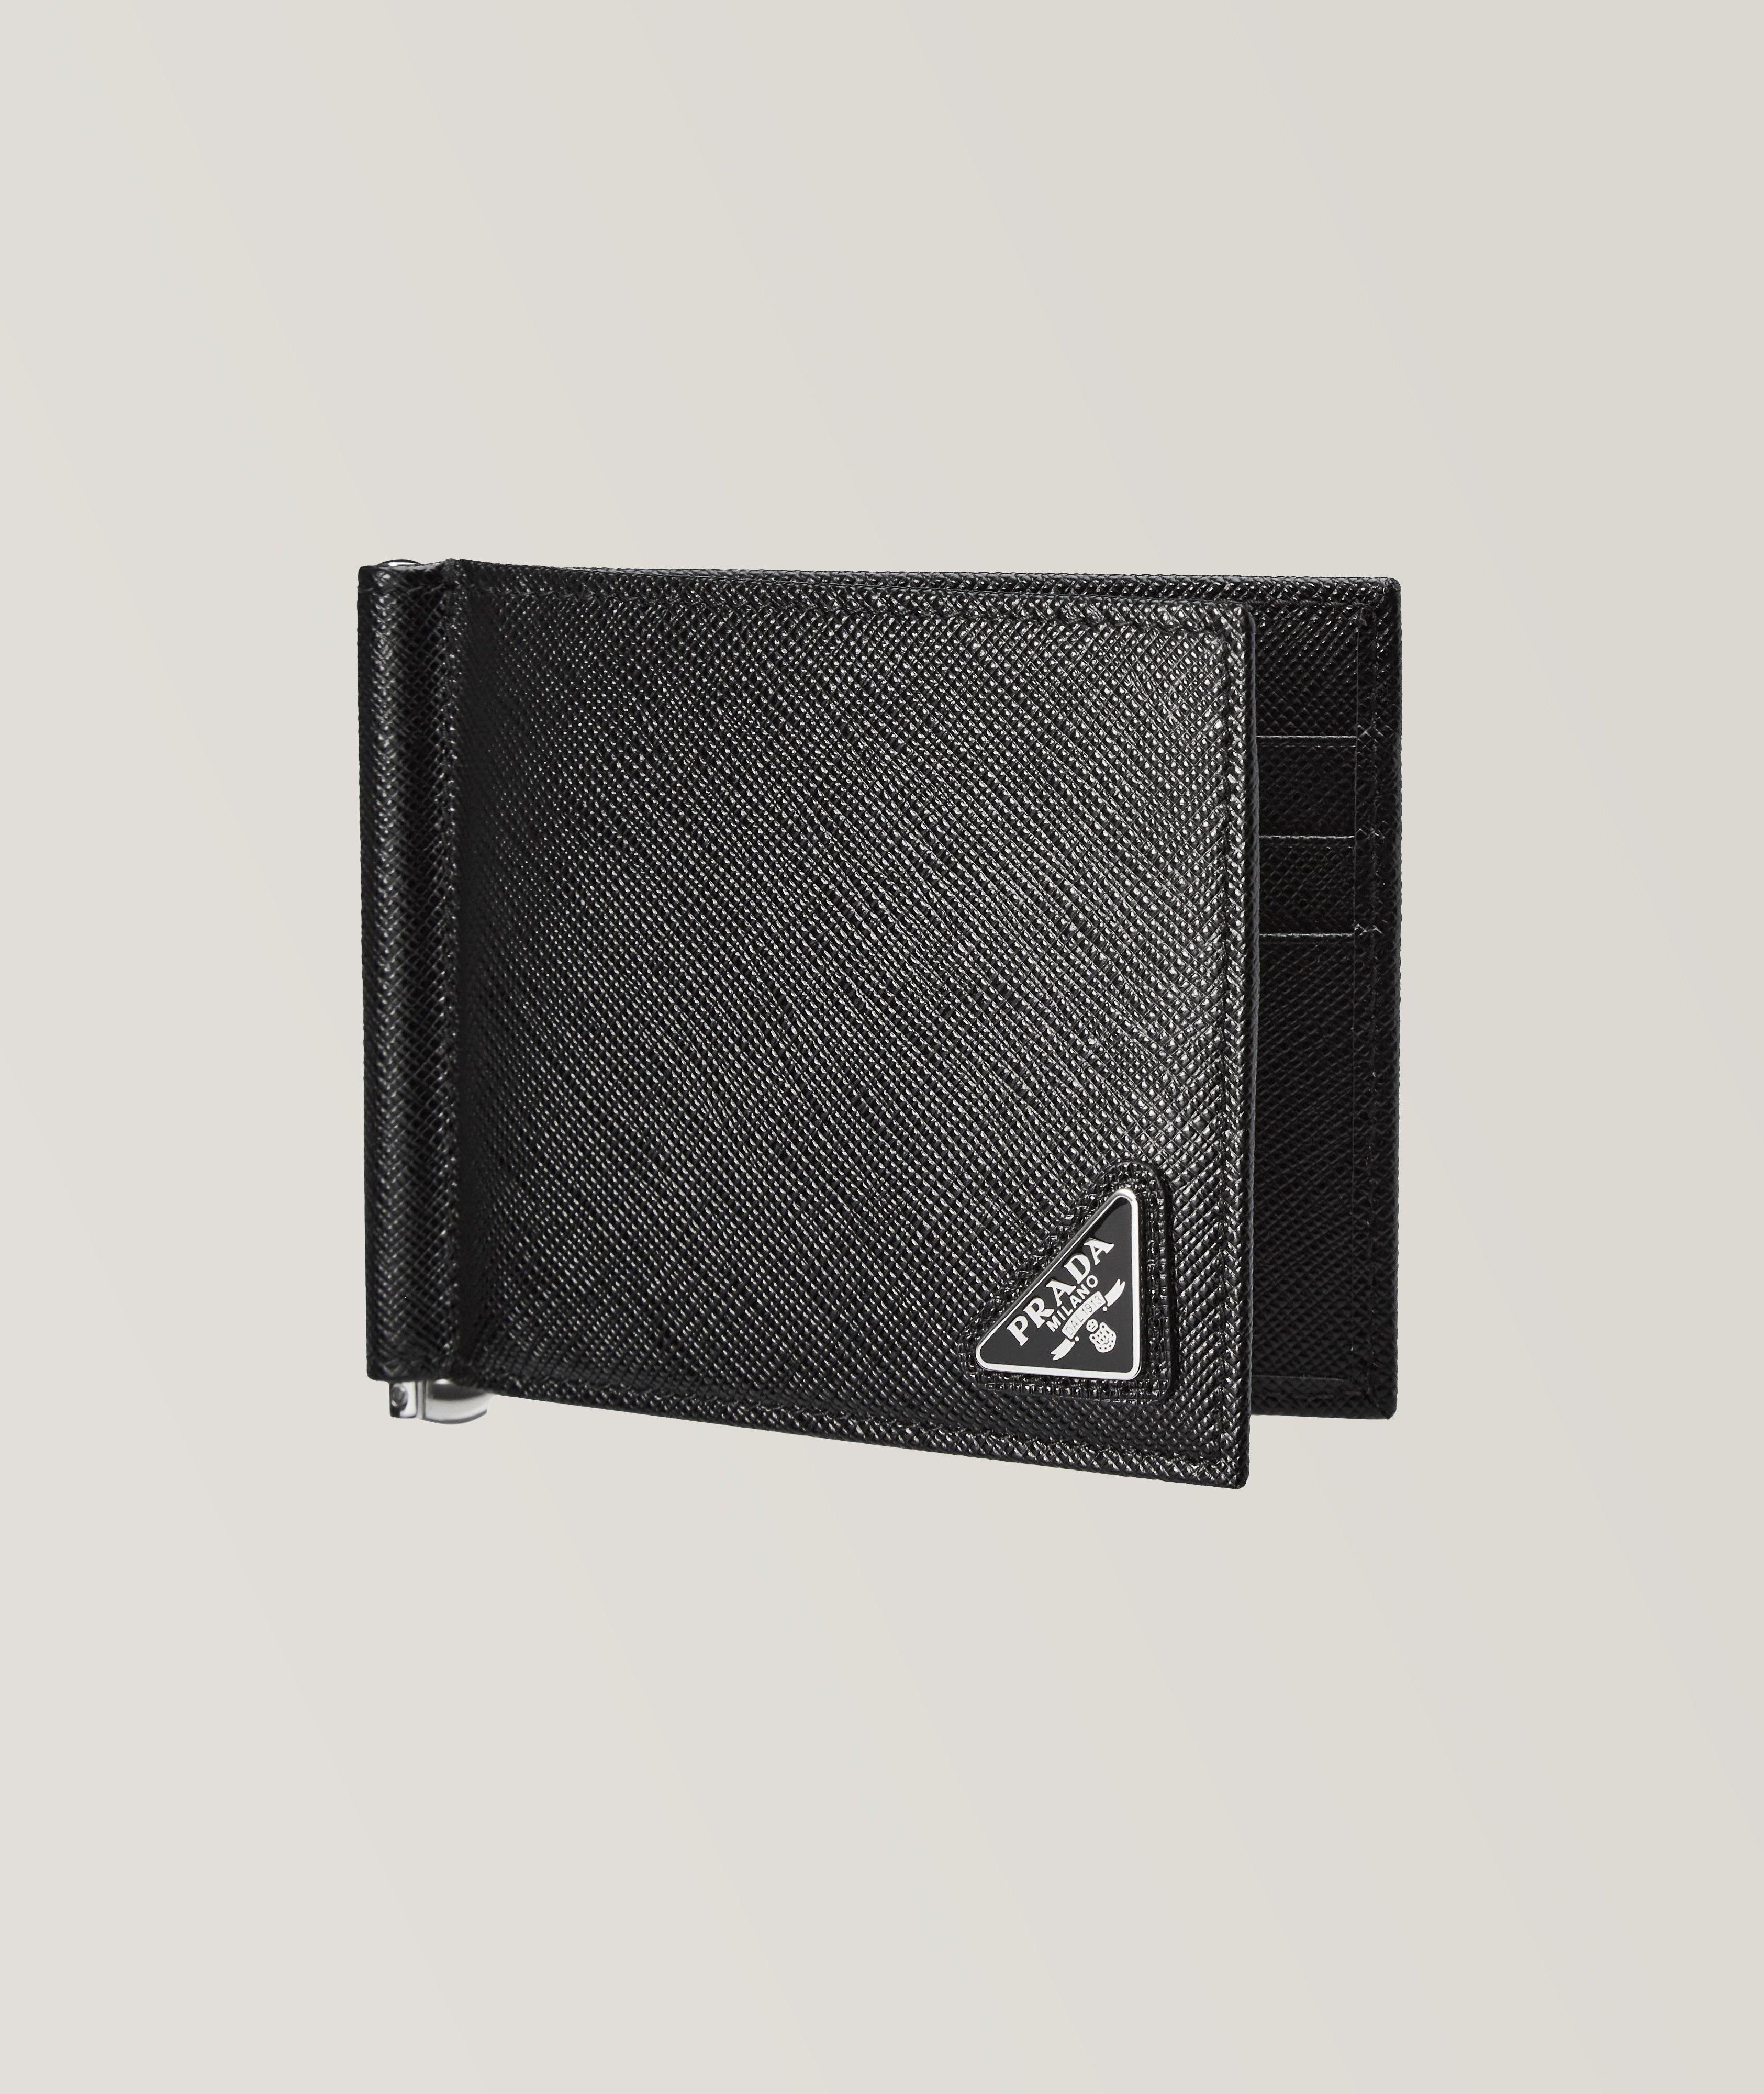 Prada Navy Blue Saffiano Lux Leather Money Clip Bi-fold Wallet